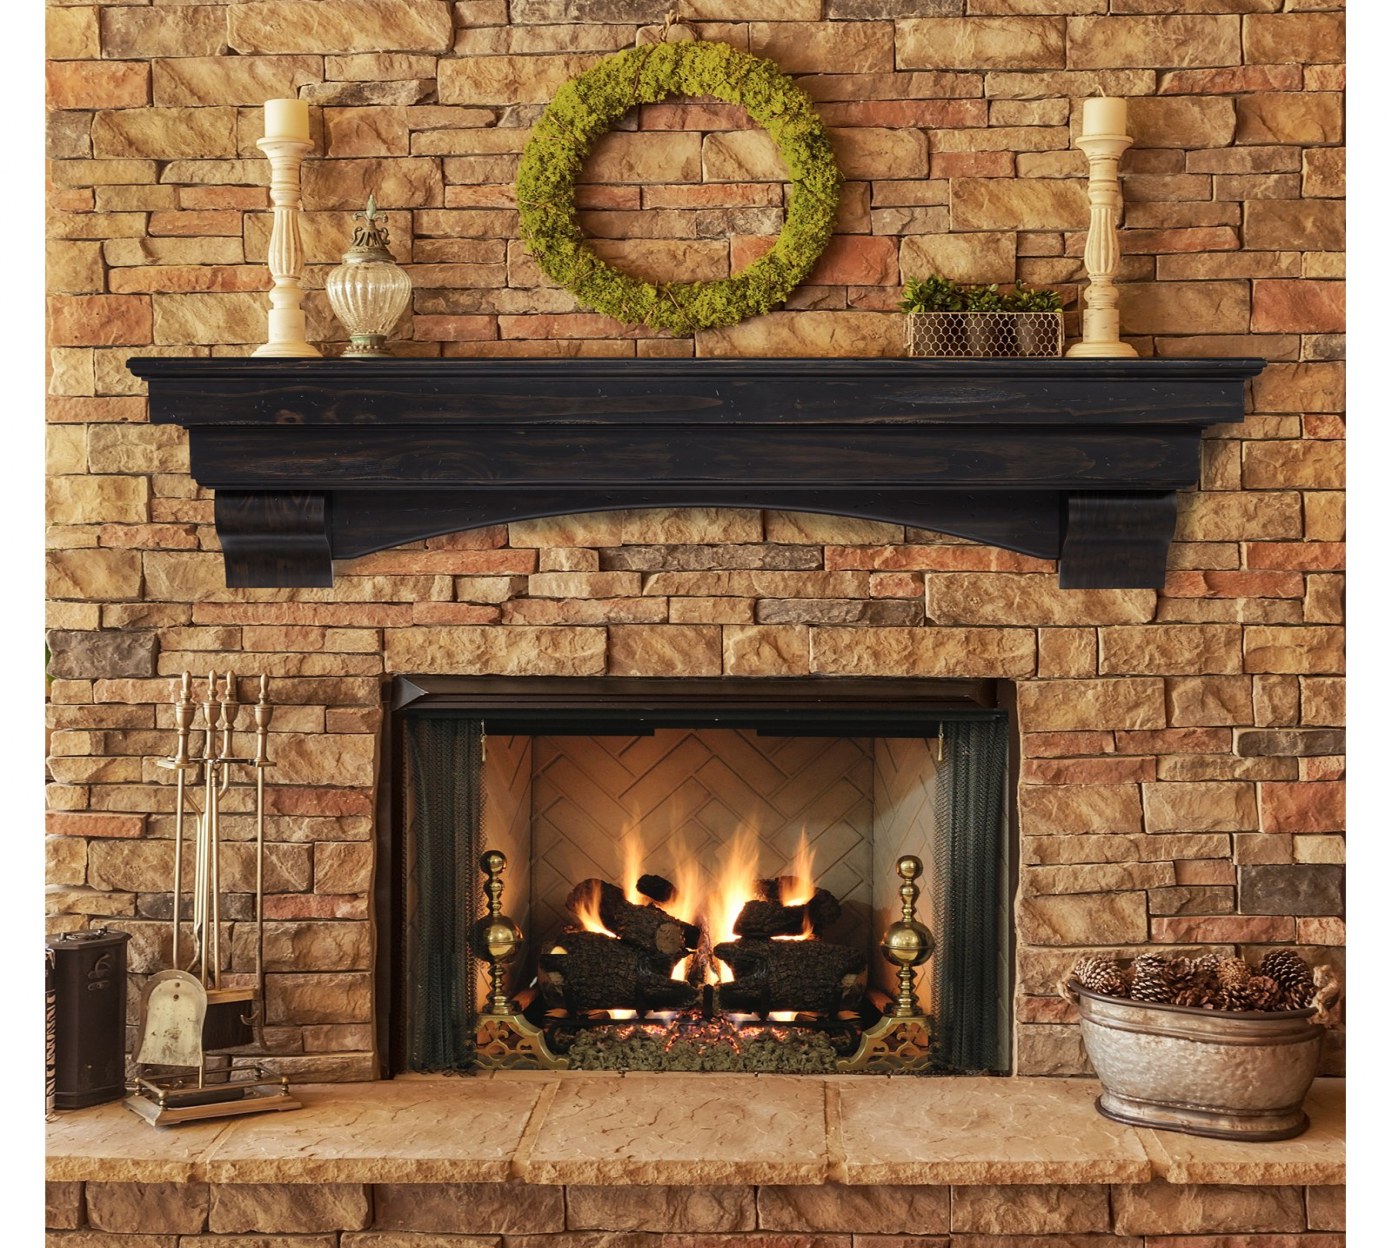 Diy Fireplace Mantel Ideas Luxury Fireplace Mantel Shelf Relatively Fireplace Surround with